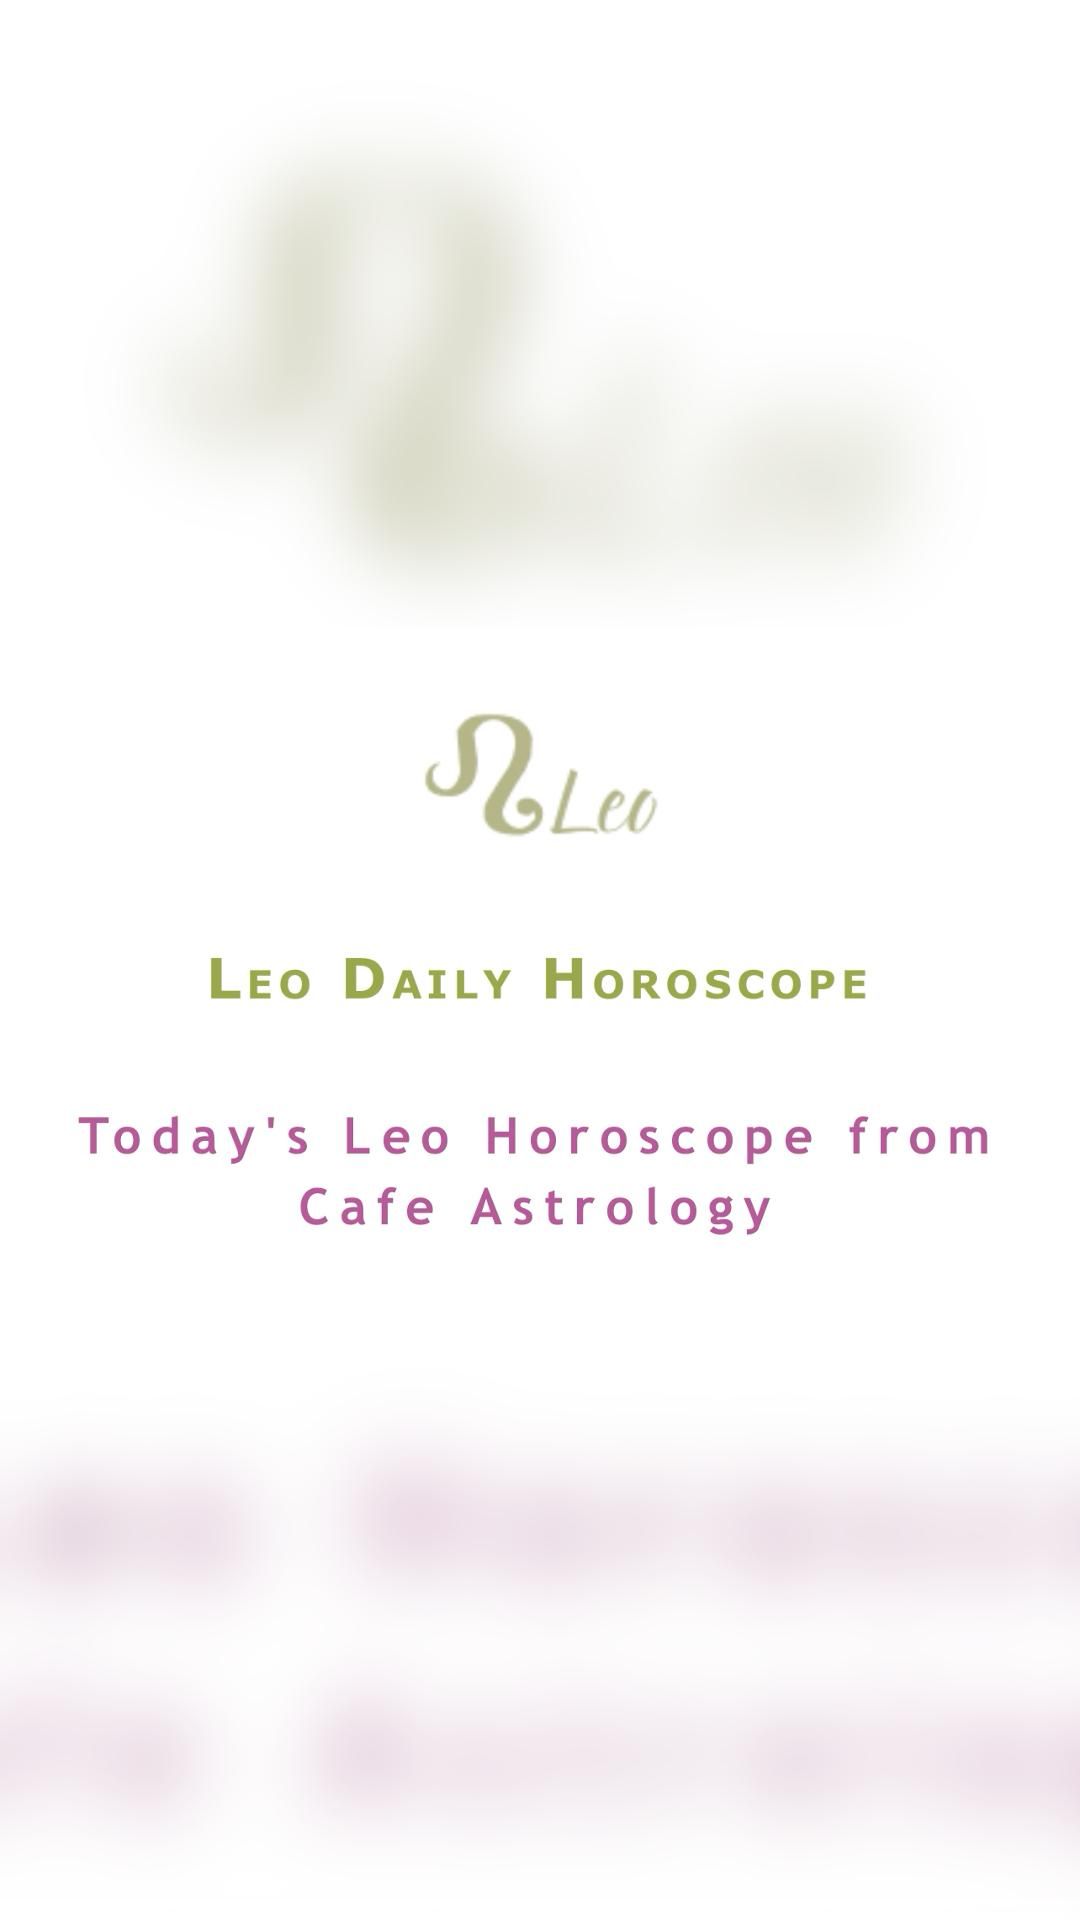 leo daily horoscope cafe astrology